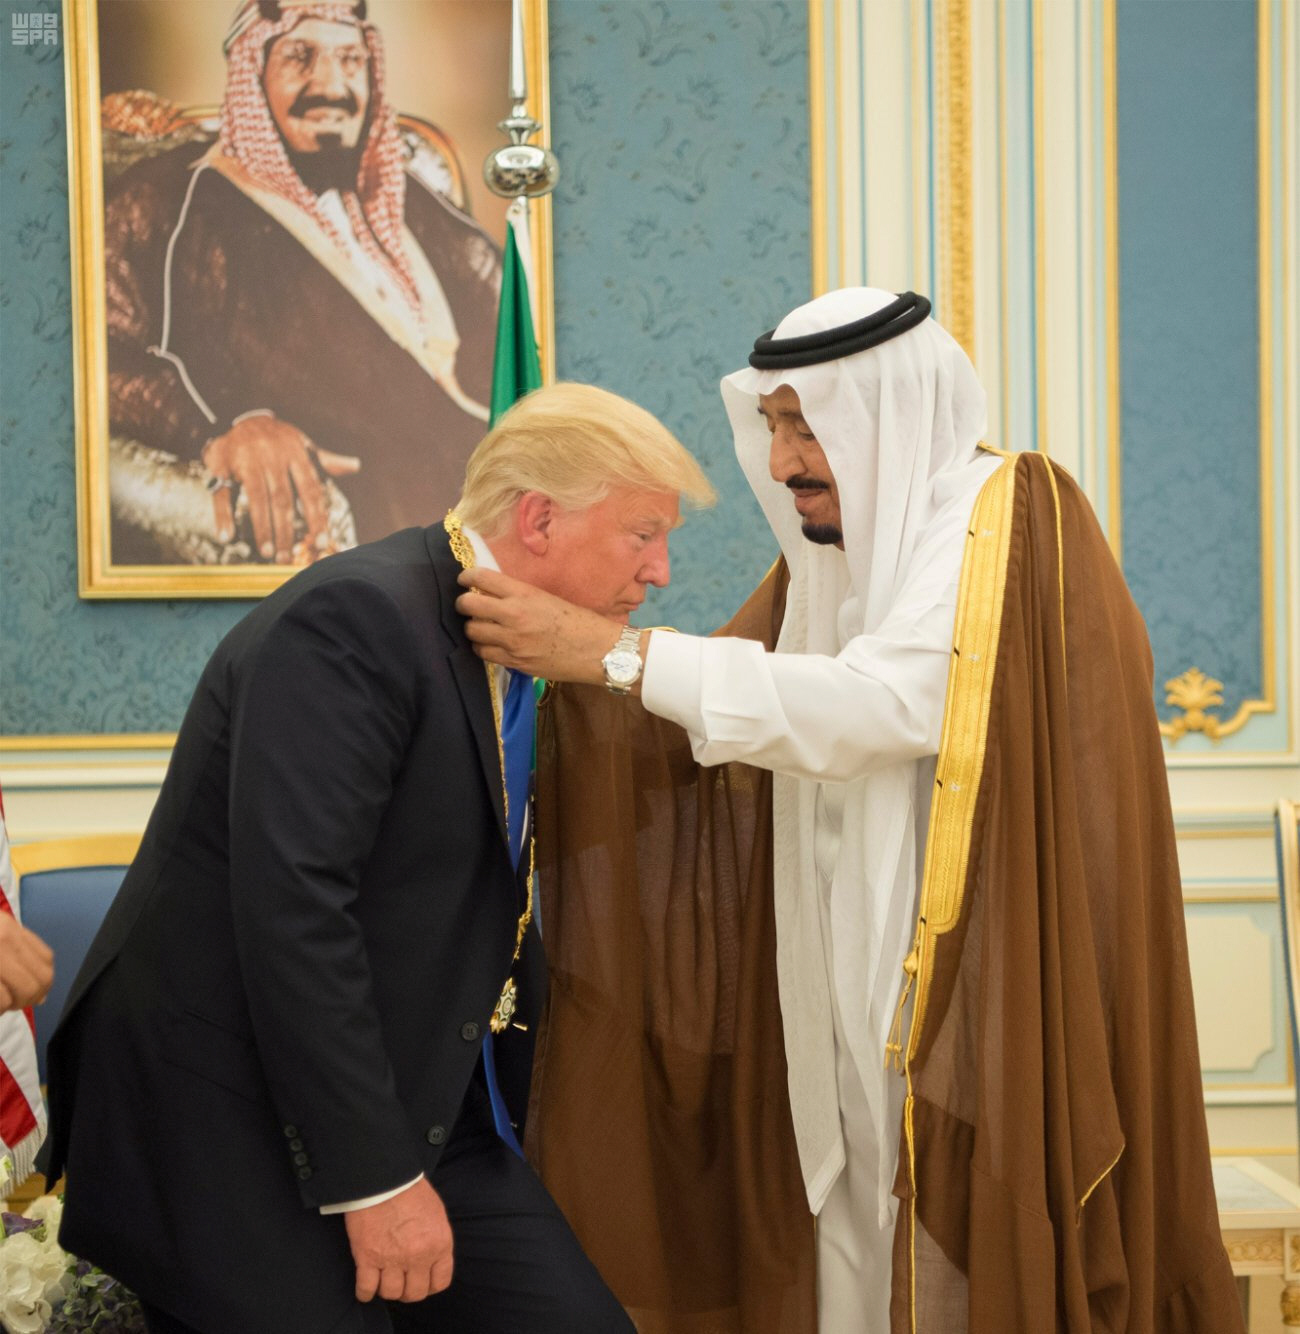 saudi arabia 039 s king salman bin abdulaziz al saud r presents u s president donald trump c with the collar of abdulaziz al saud medal at the royal court in riyadh saudi arabia may 20 2017 photo reuters